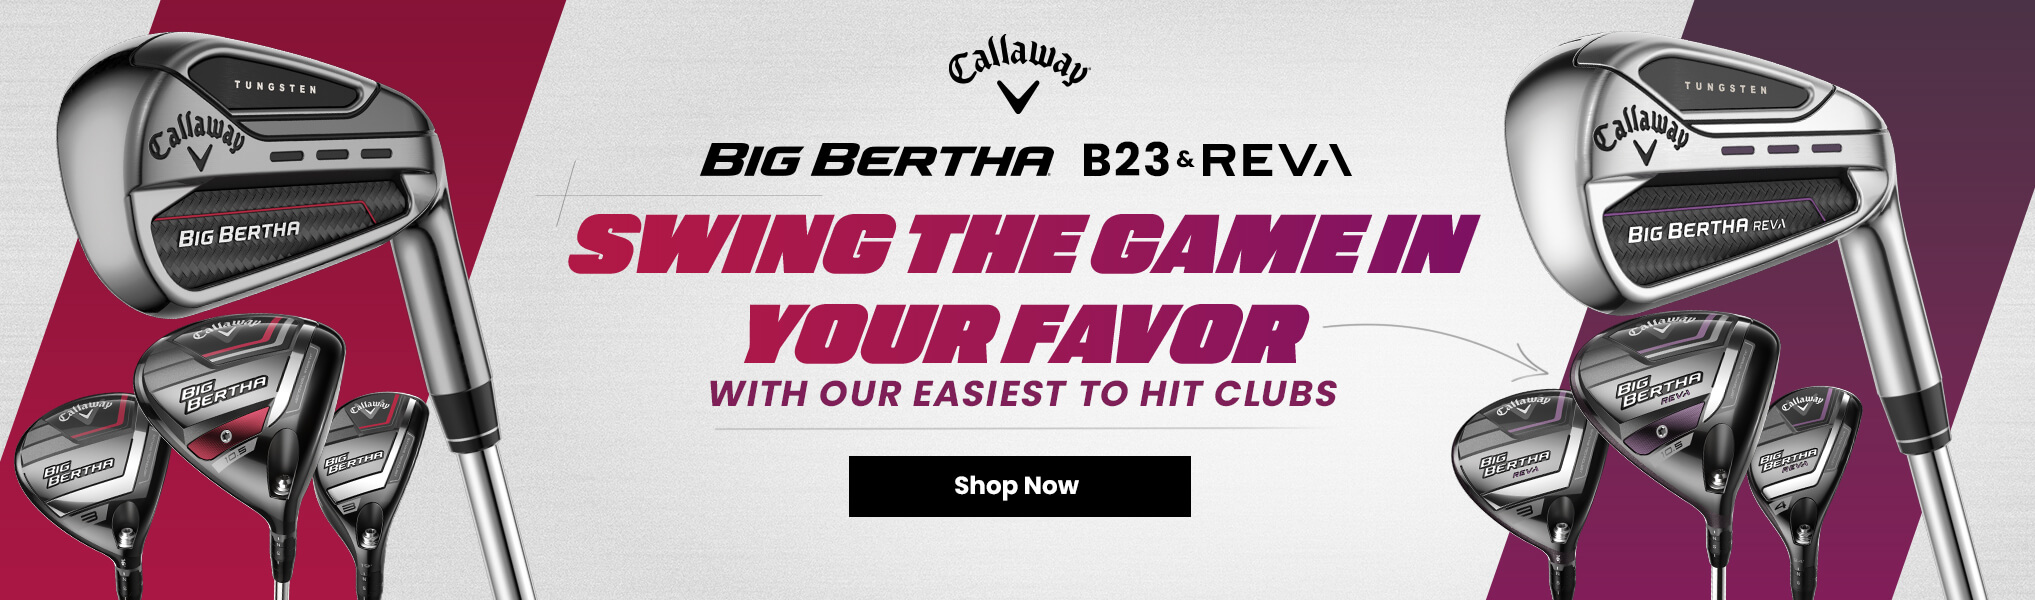 Big Bertha Reva by Callaway